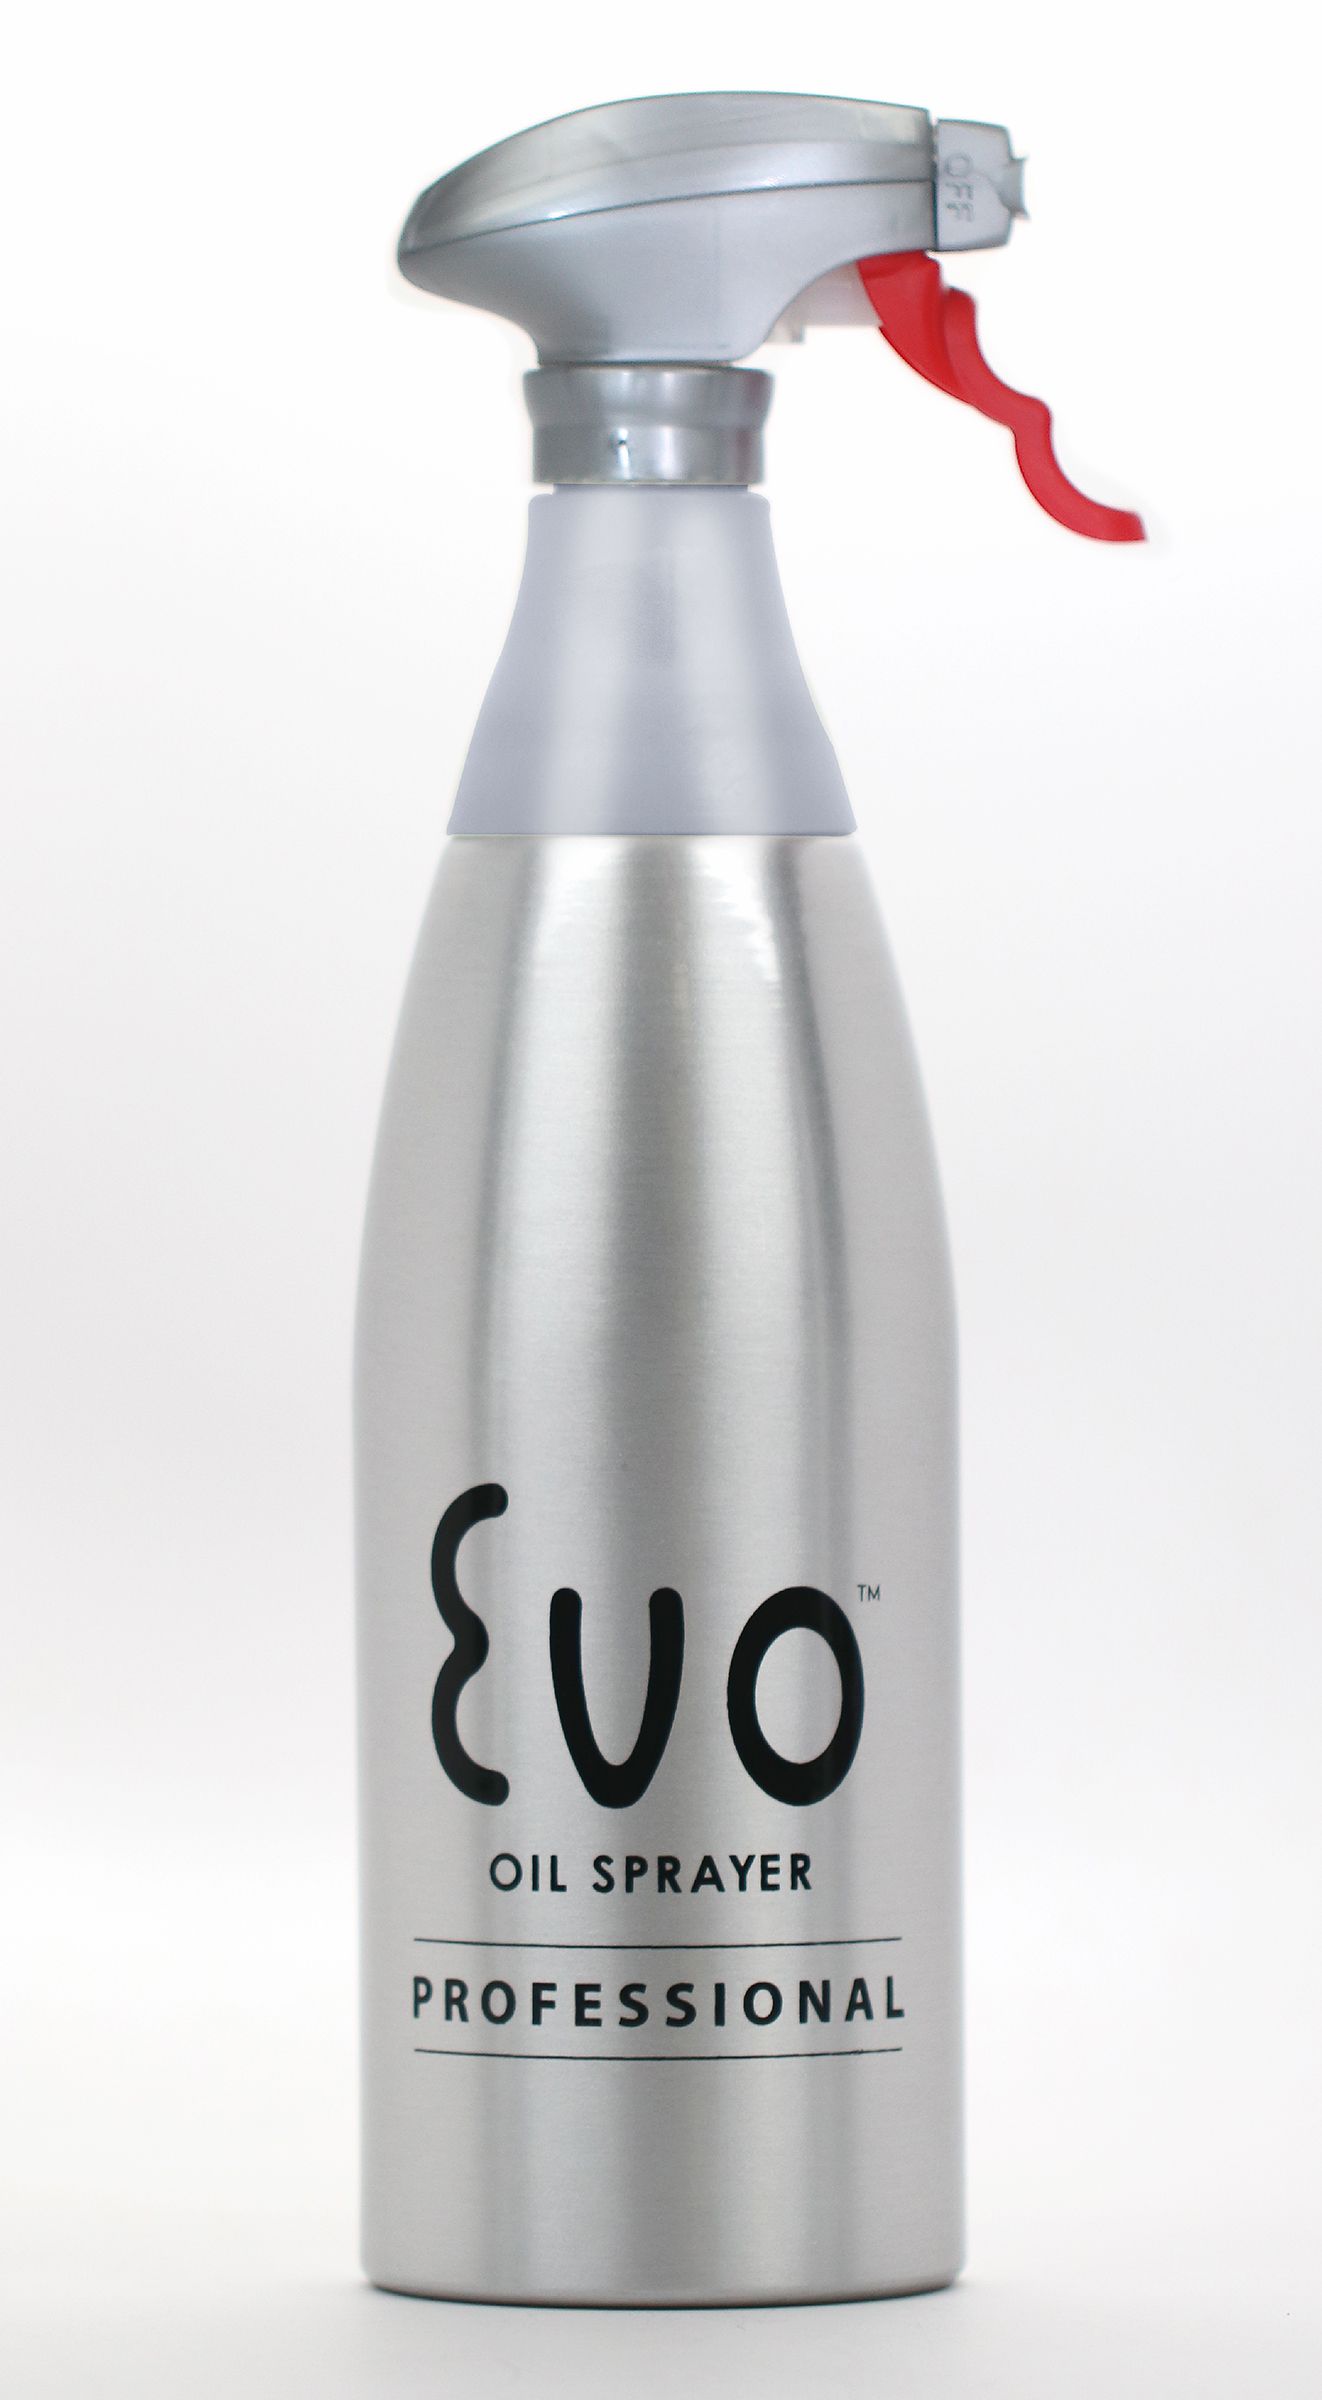 Evo Original Oil Sprayer, 18-Ounce Capacity - Bed Bath & Beyond - 39497745